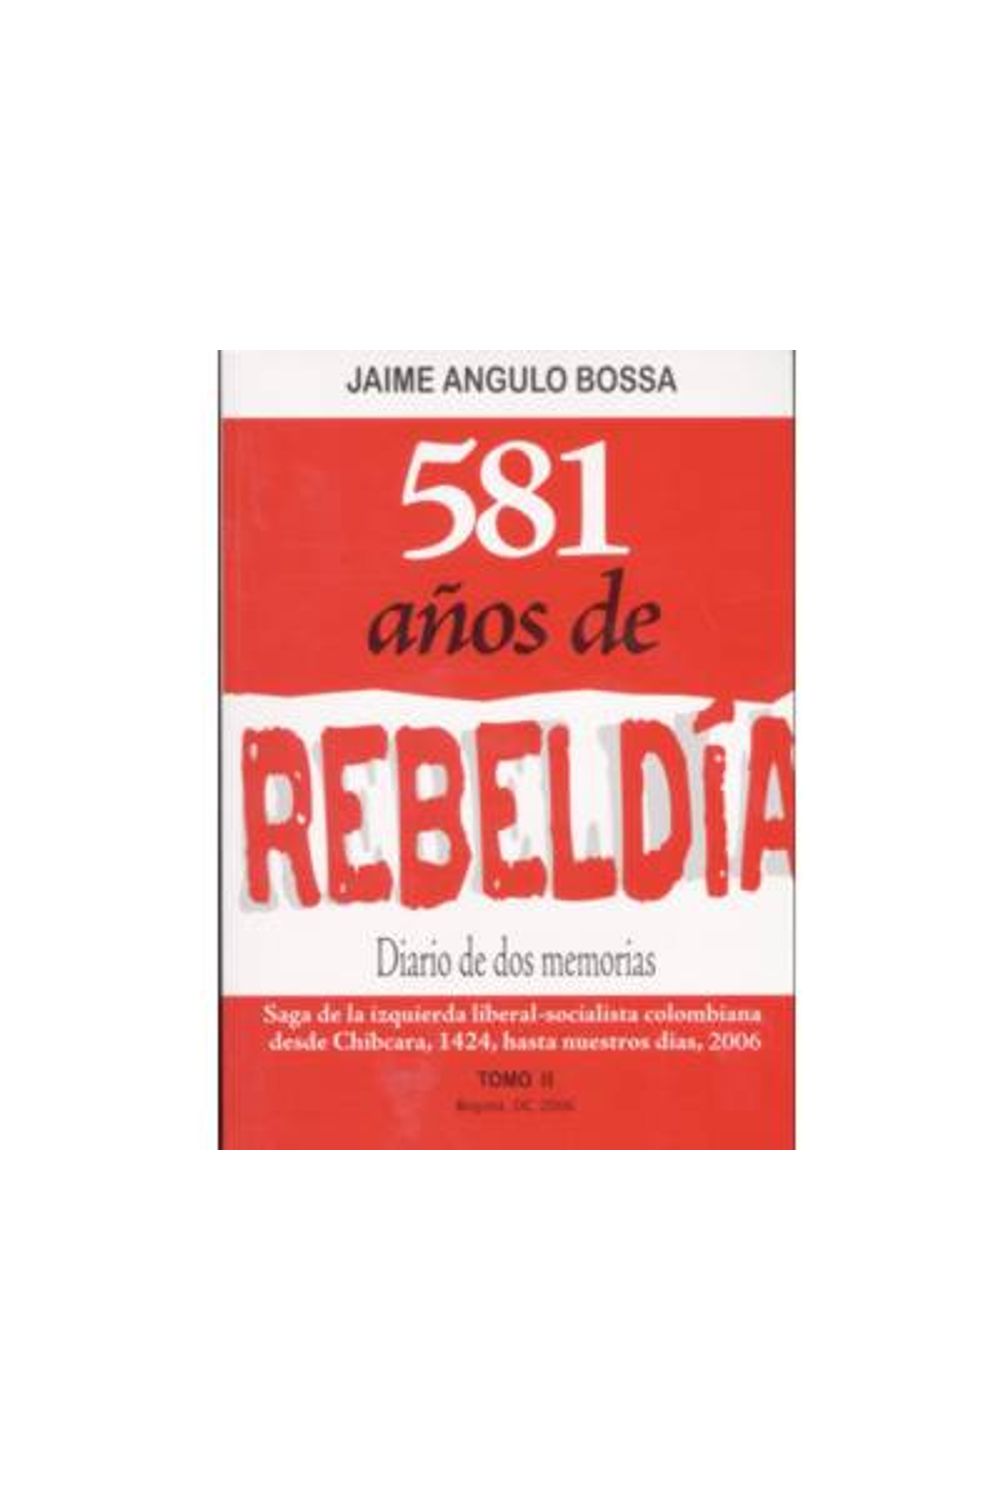 02_581_anos_de_rebeldia